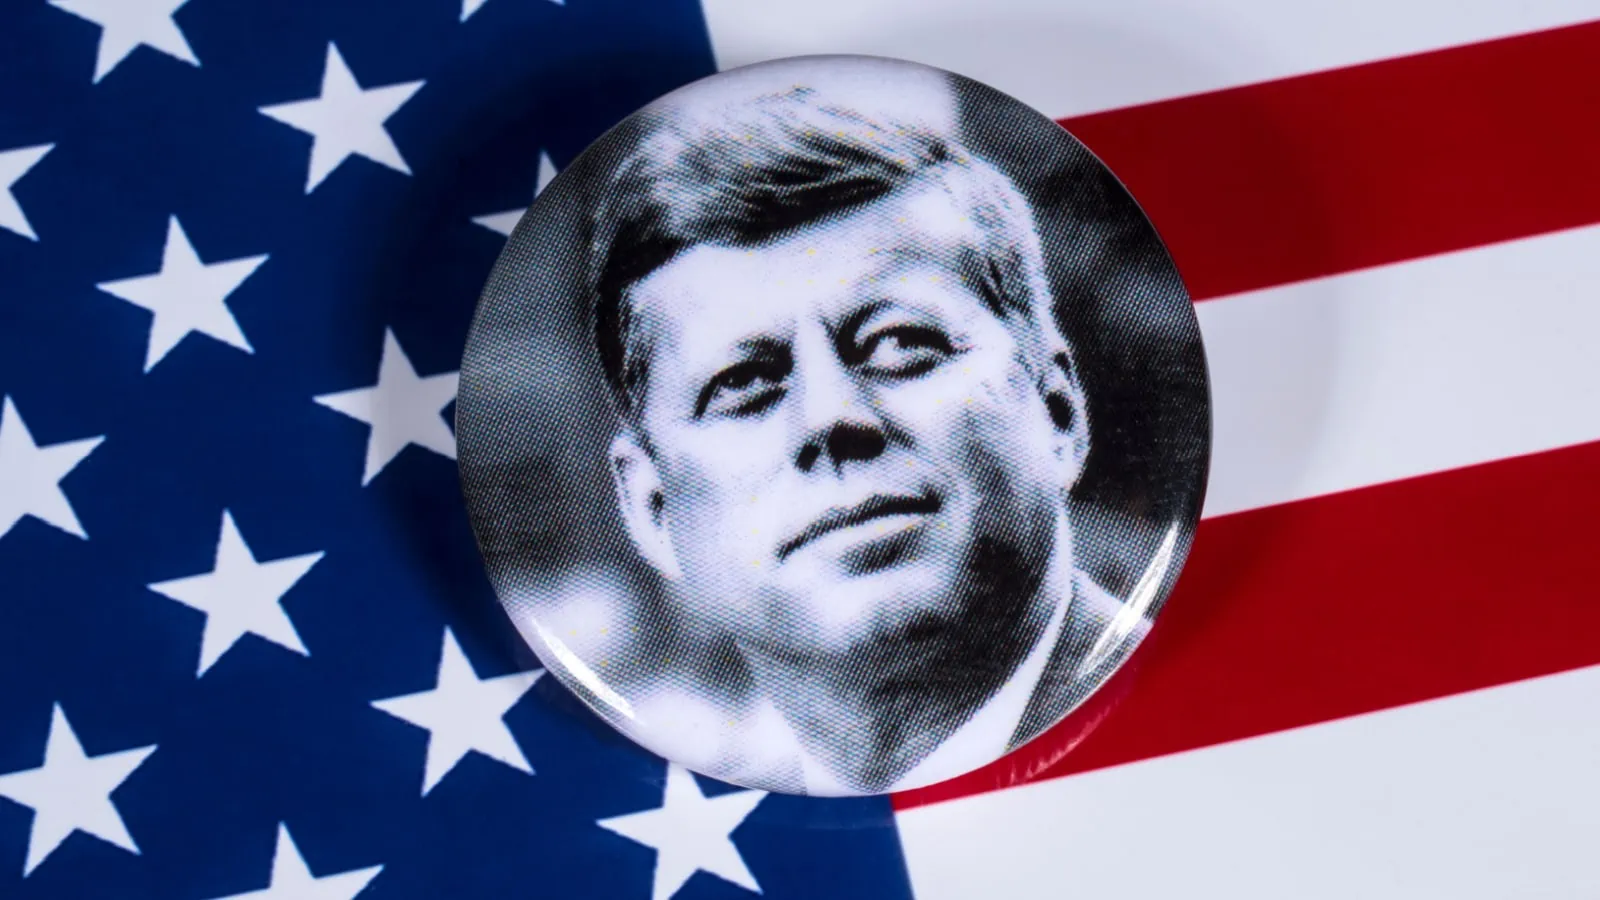 John F Kennedy (JFK)